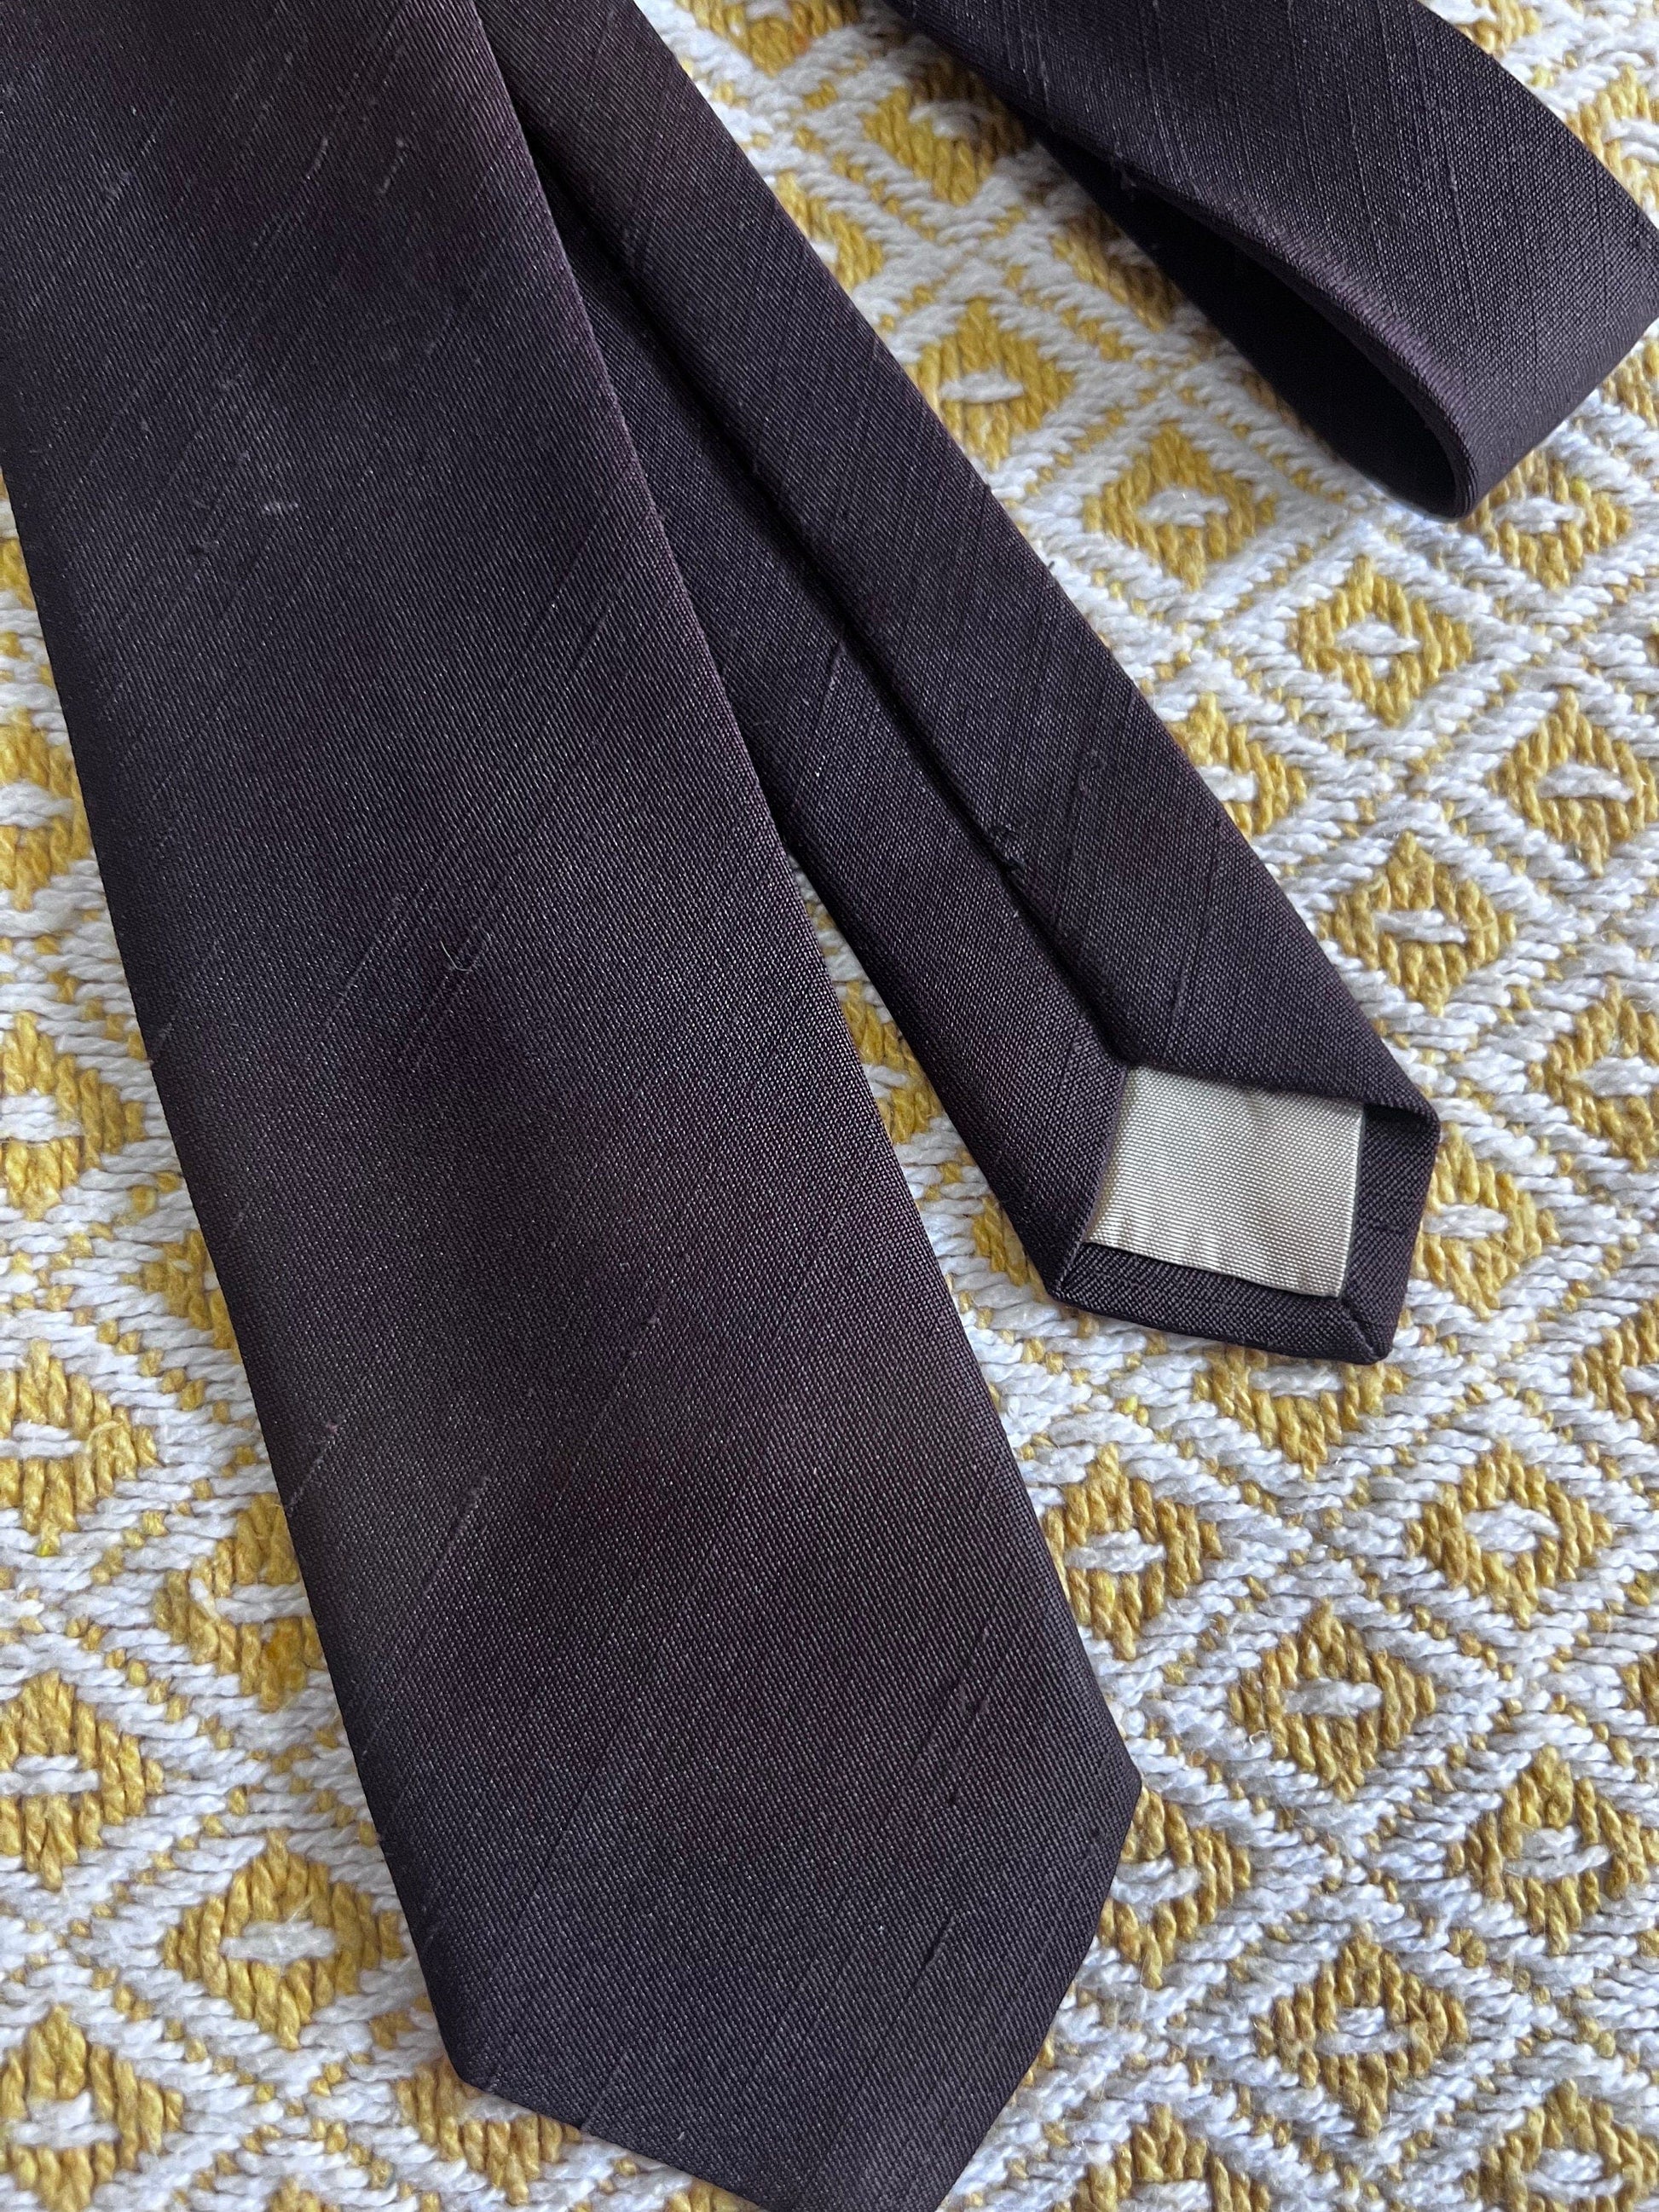 1950s 1960s Mens Skinny Necktie Tie, brown   check tie, Vintage Tie, Vintage Necktie, 50s 60s Tie, vintage neckwear